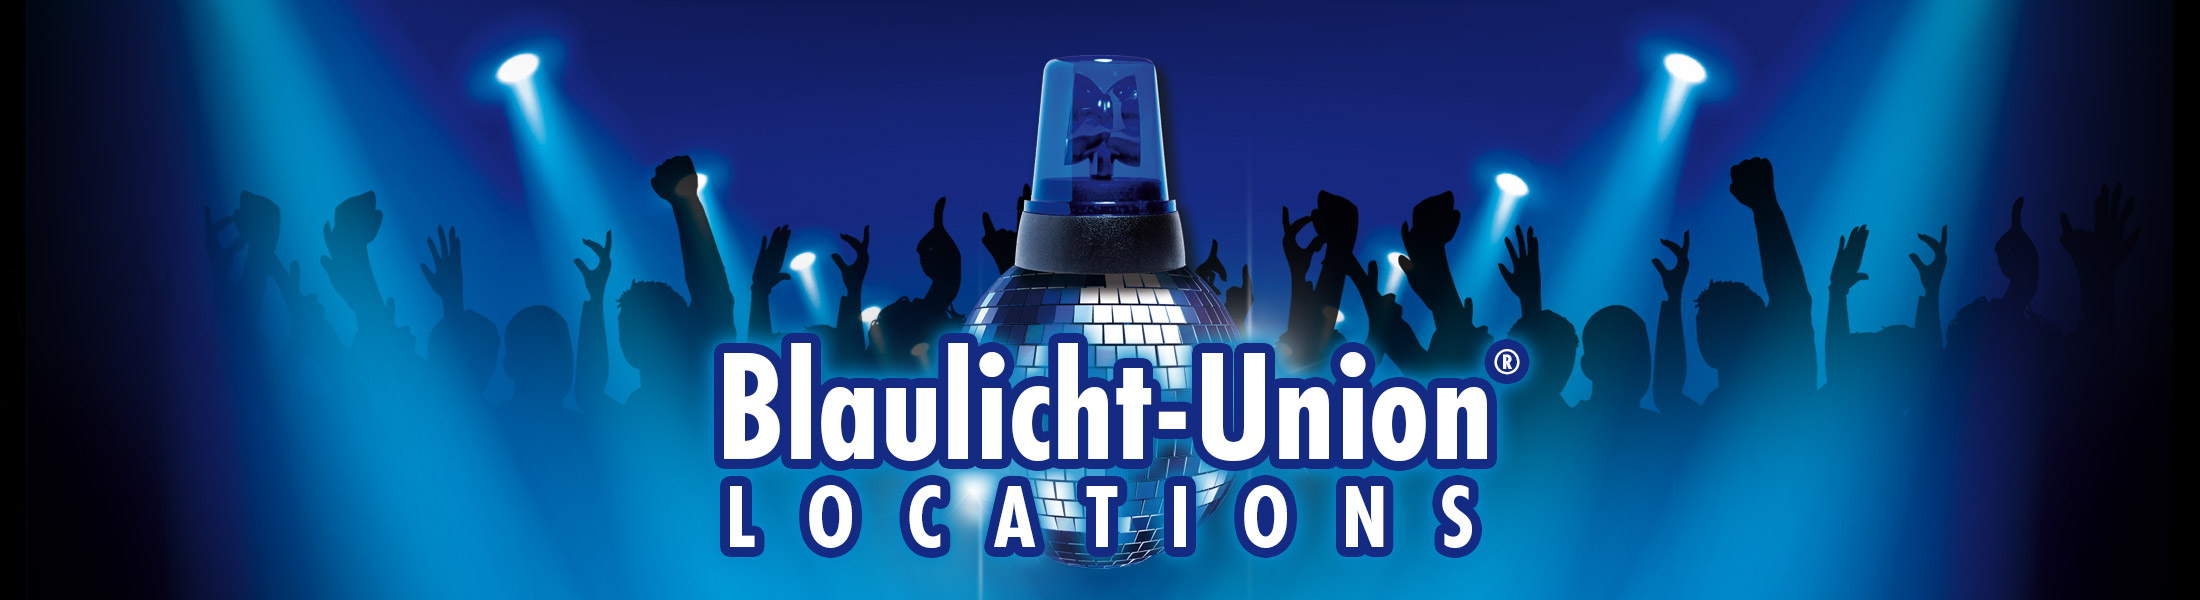 Blaulicht Union Party® Locations